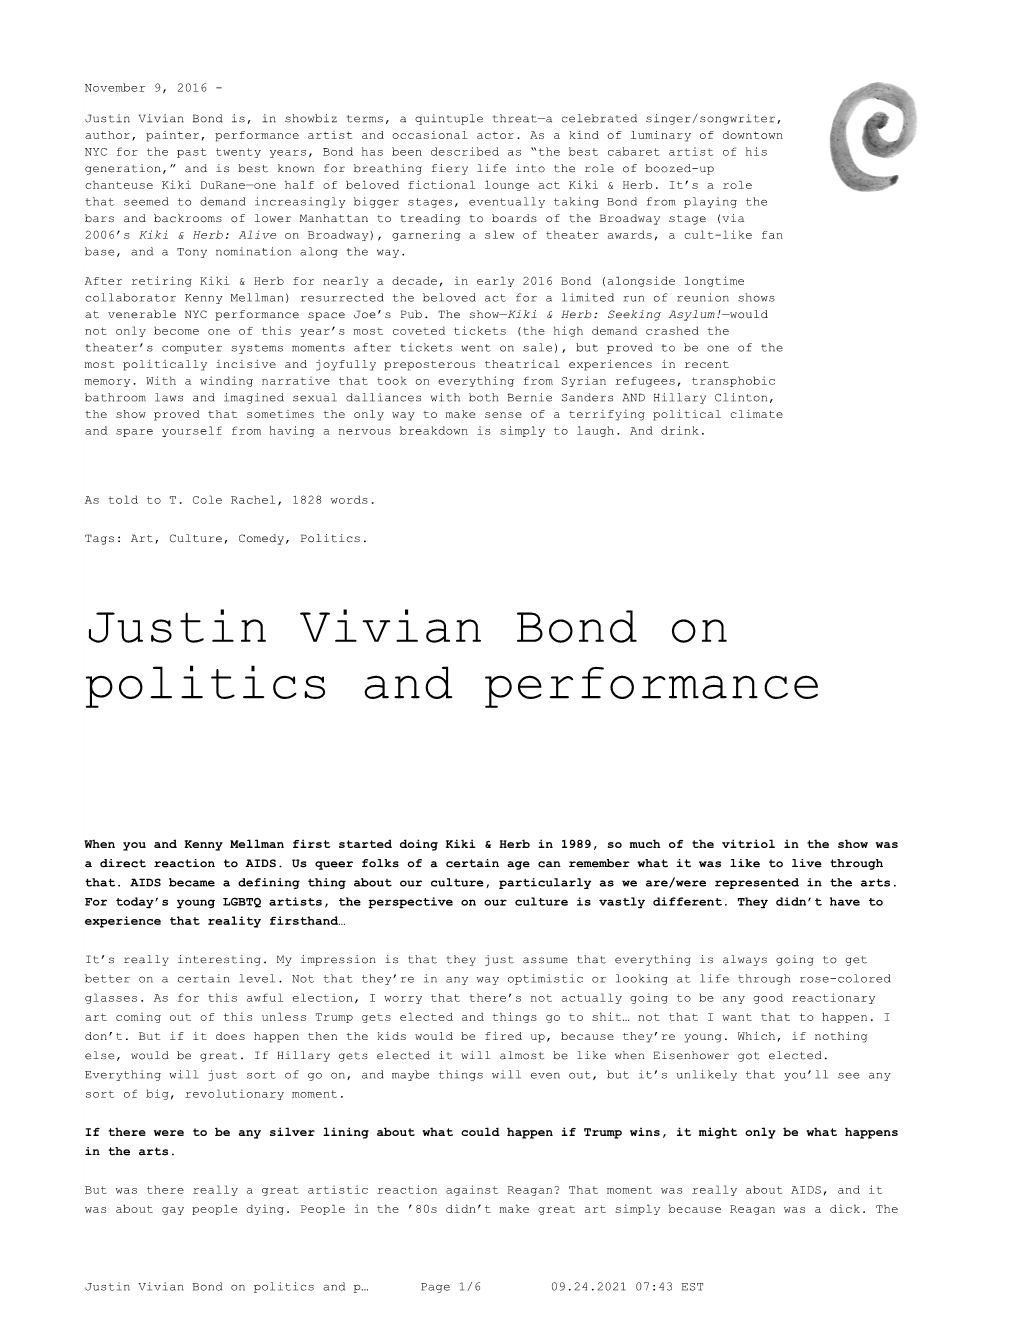 Justin Vivian Bond on Politics and Performance